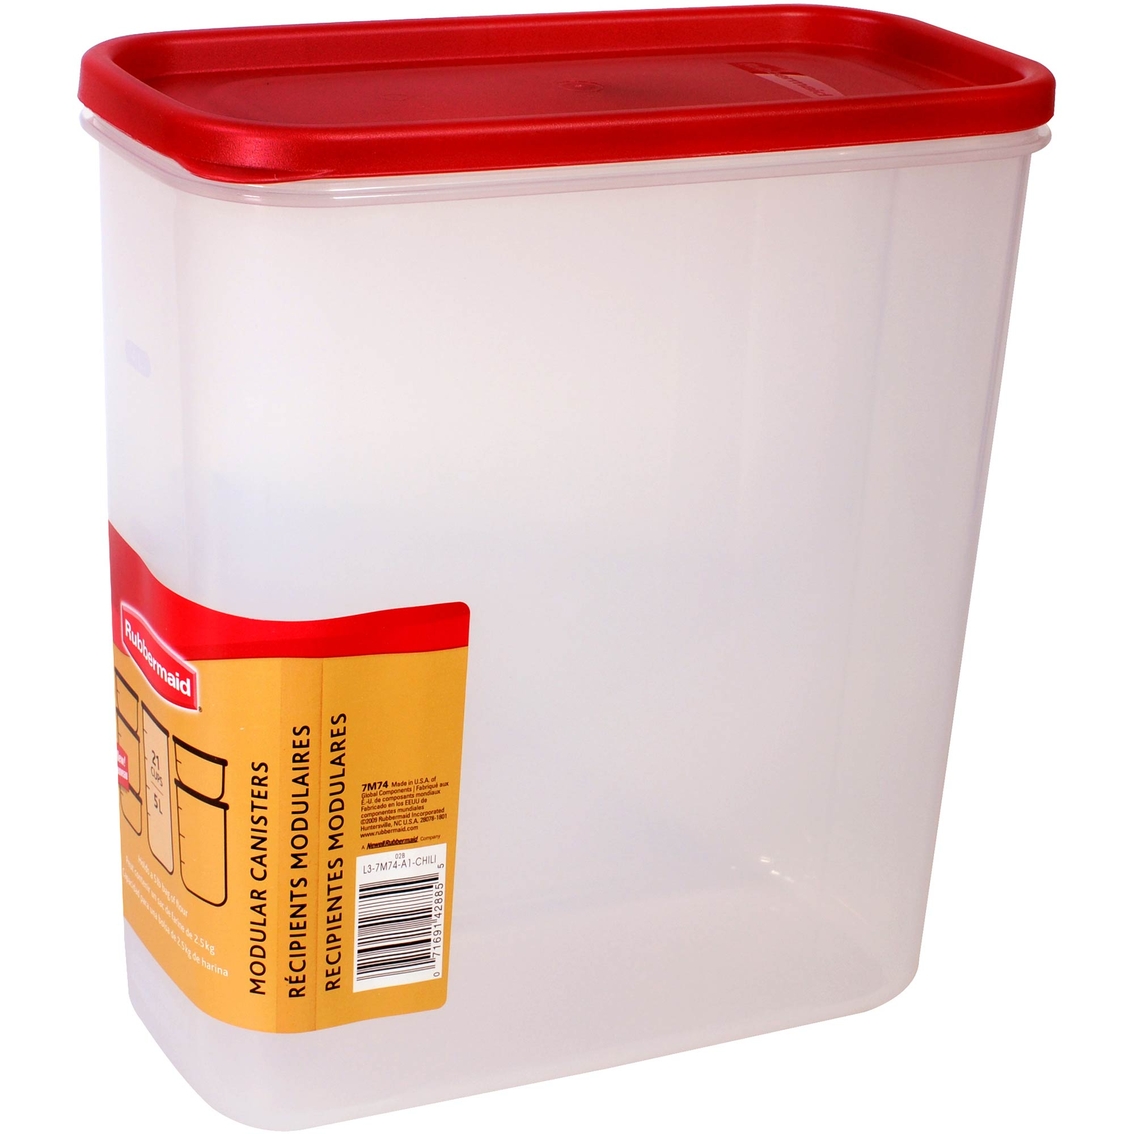 Rubbermaid's 21-piece food storage container set now $19 (Reg. $29+)